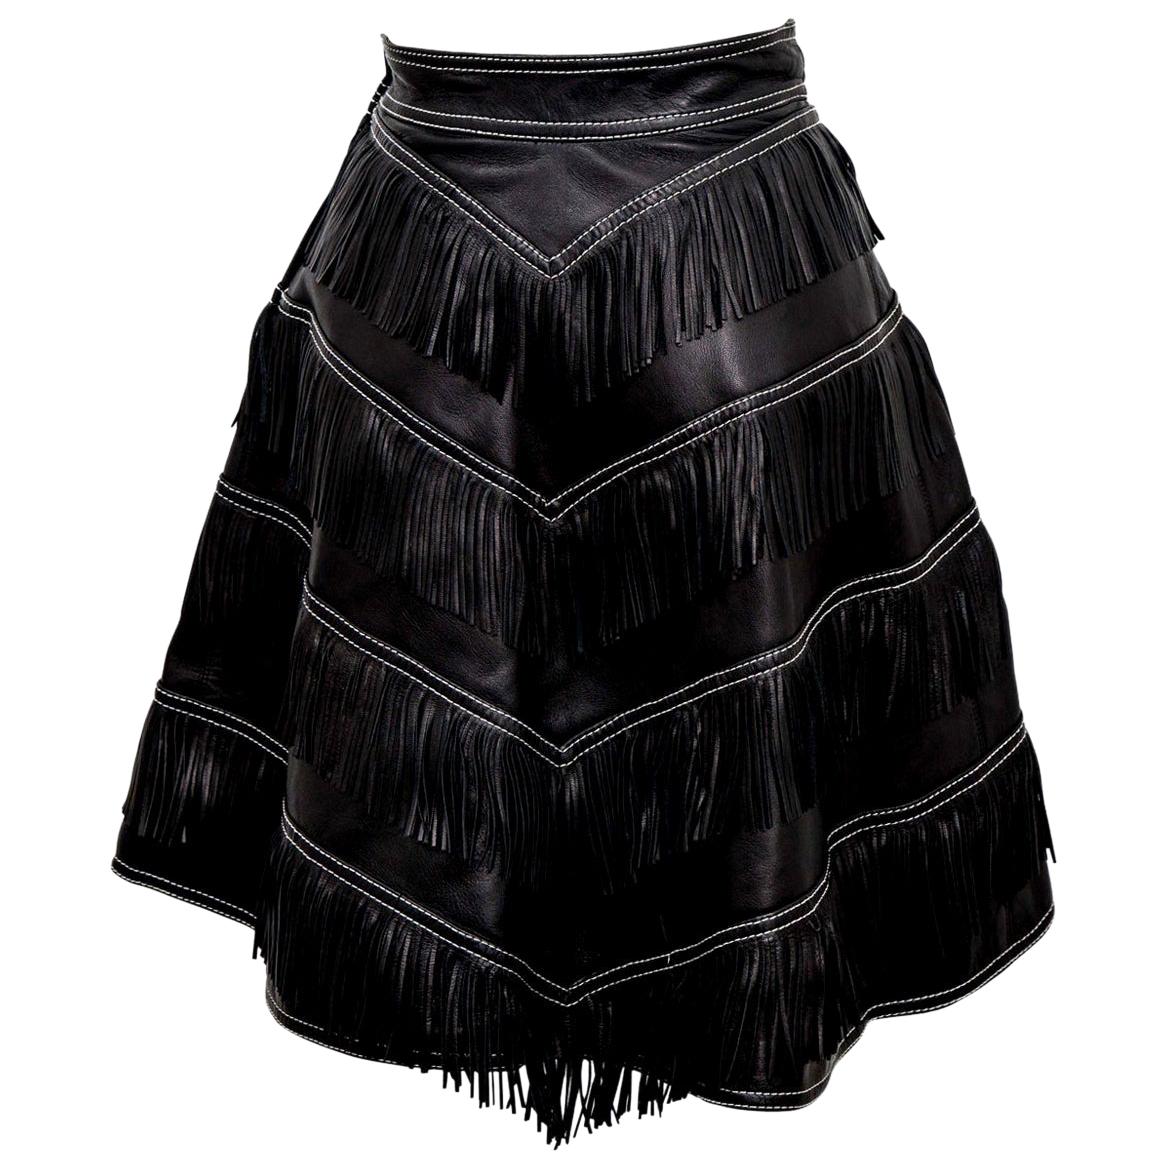 Gianni Versace Iconic 1992 Runway Black Leather Fringe Skirt For Sale